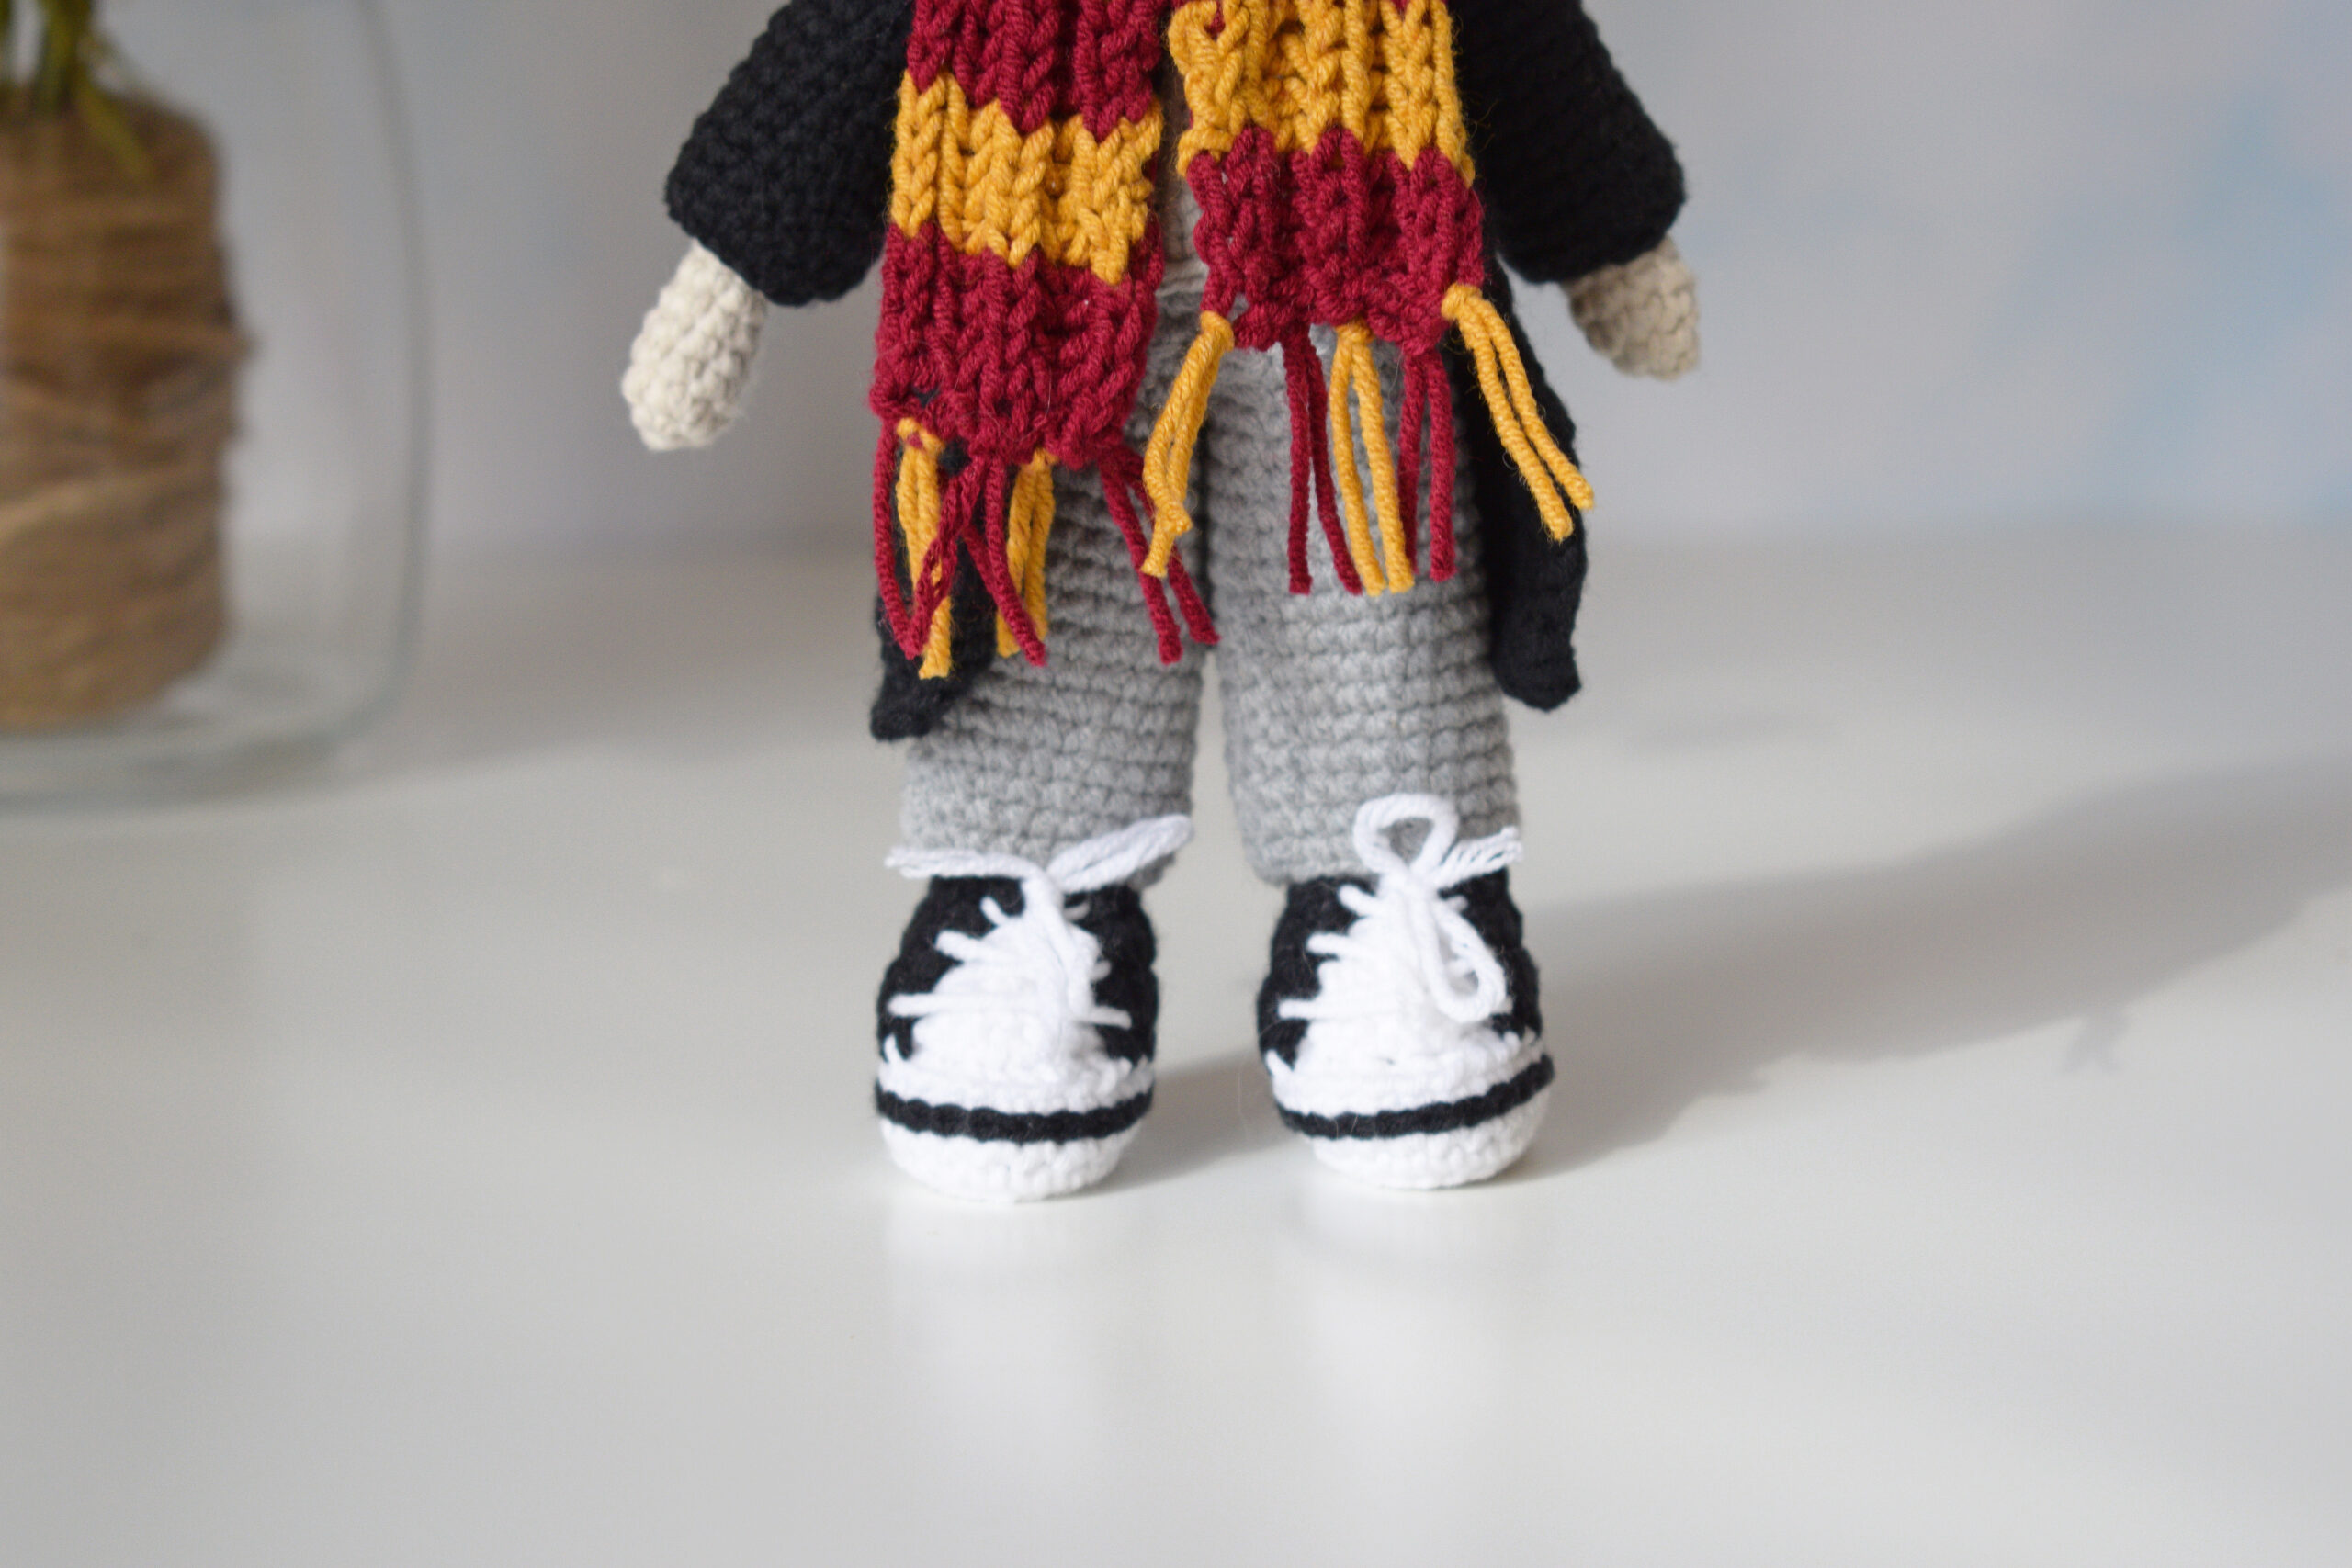 Wizard Harry Potter crochet doll pattern Amigurumi doll